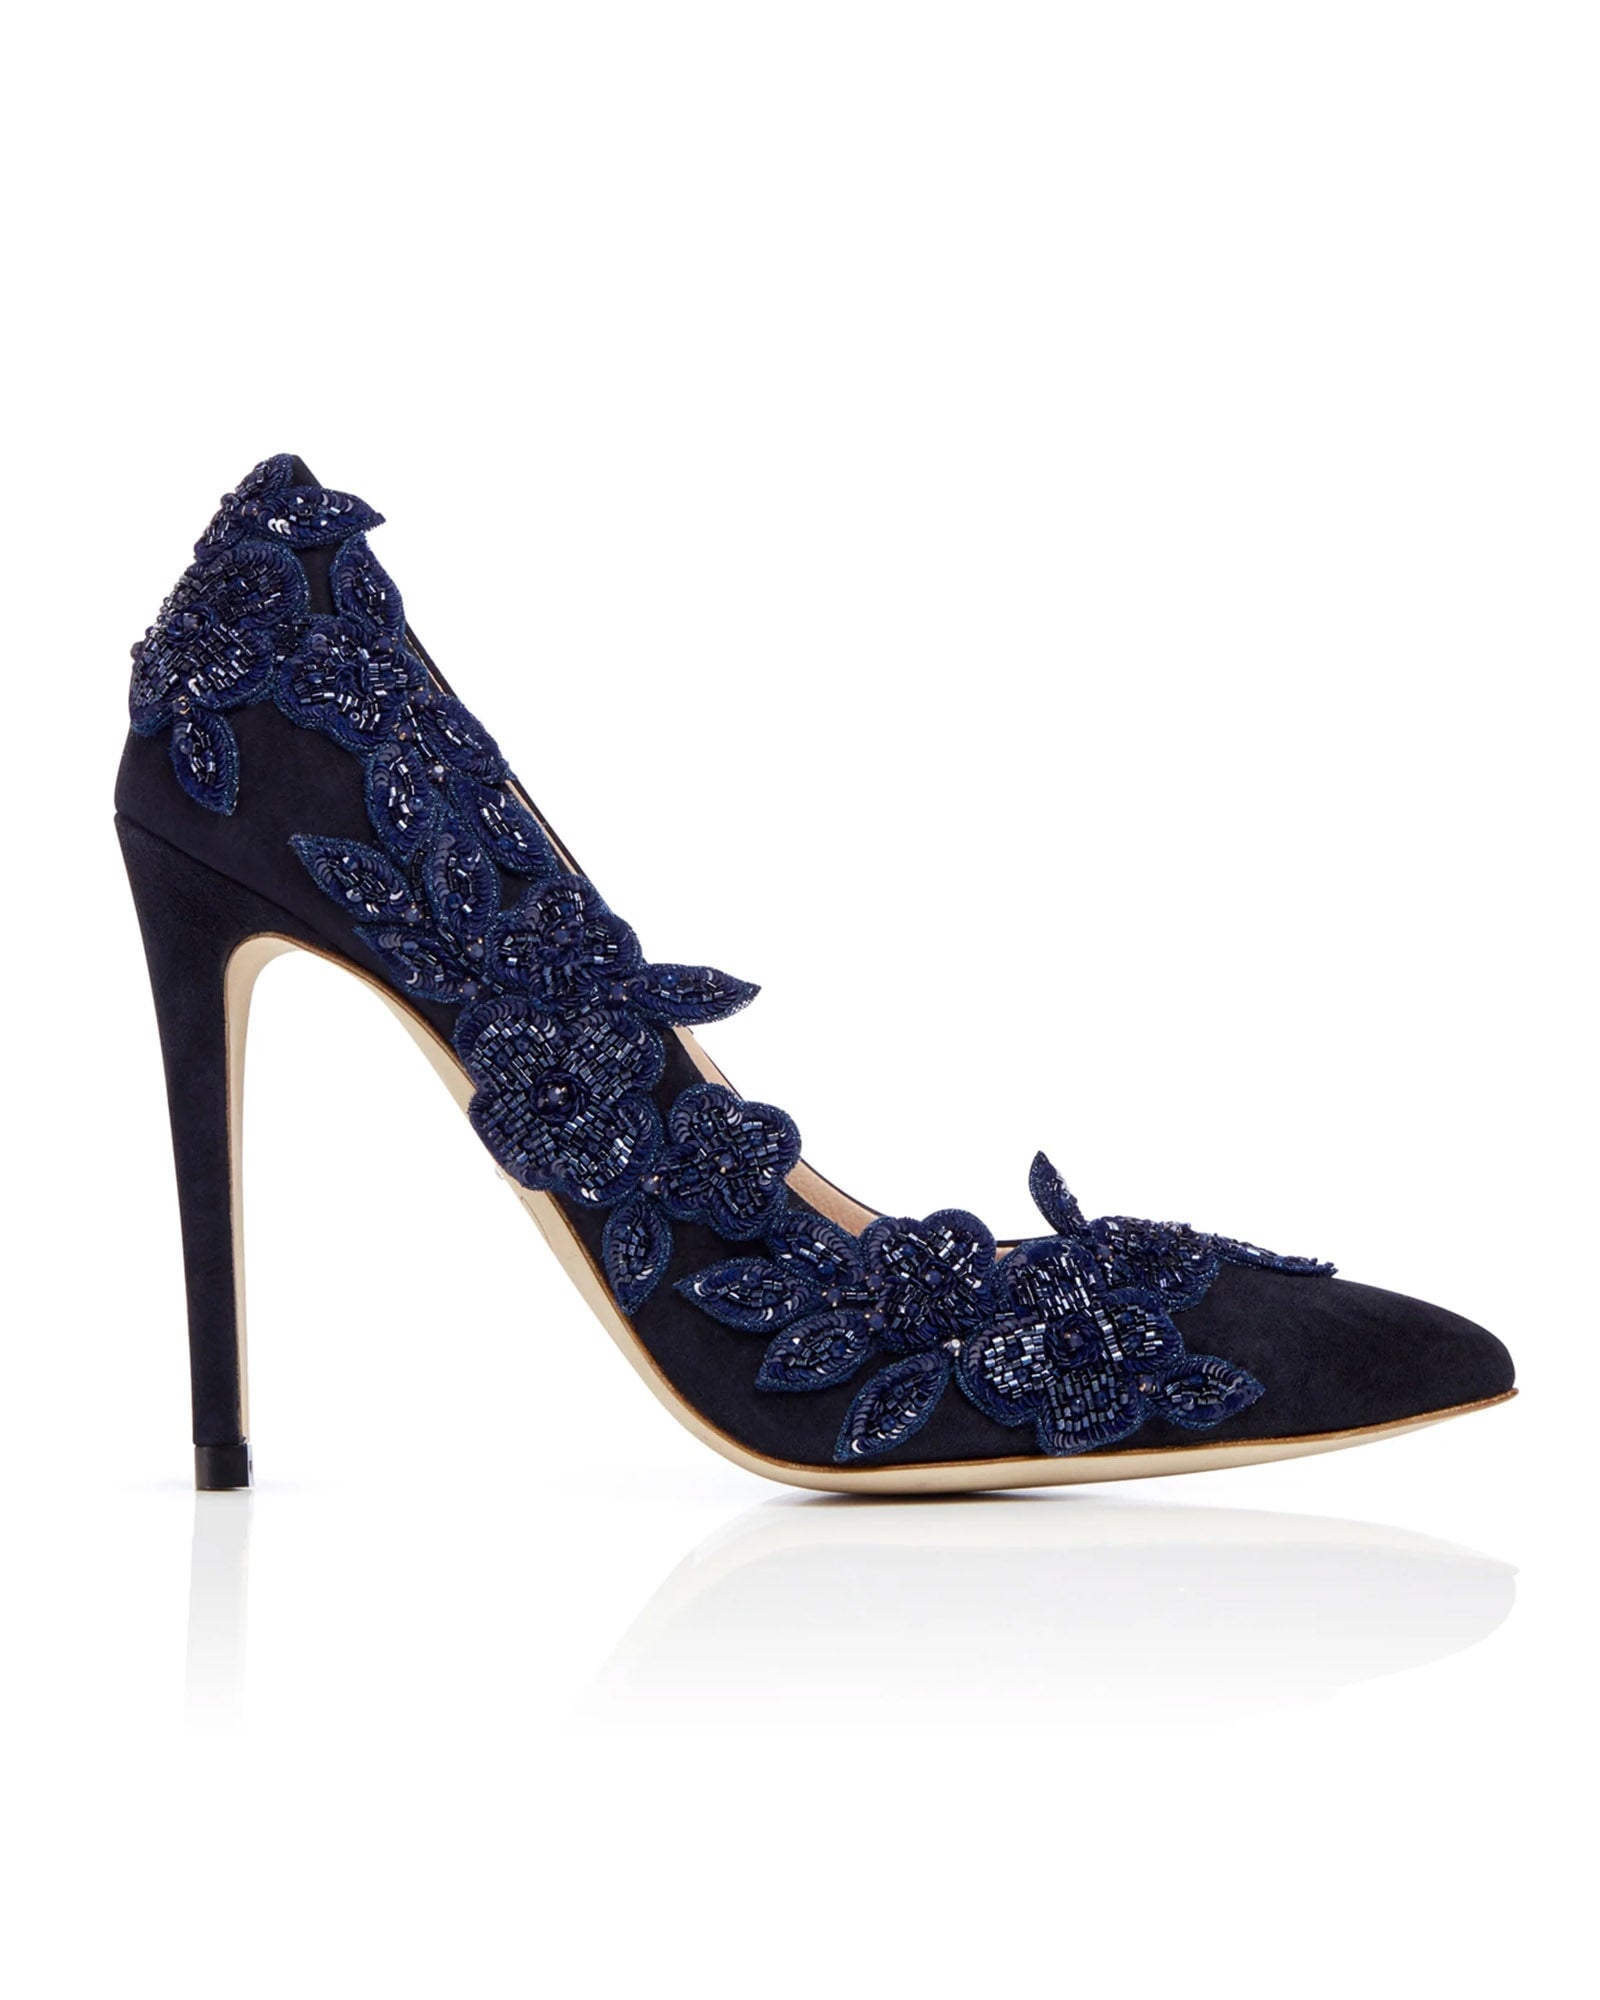 Isadora Midnight Navy Fashion Shoe Floral Embellished Shoe  image